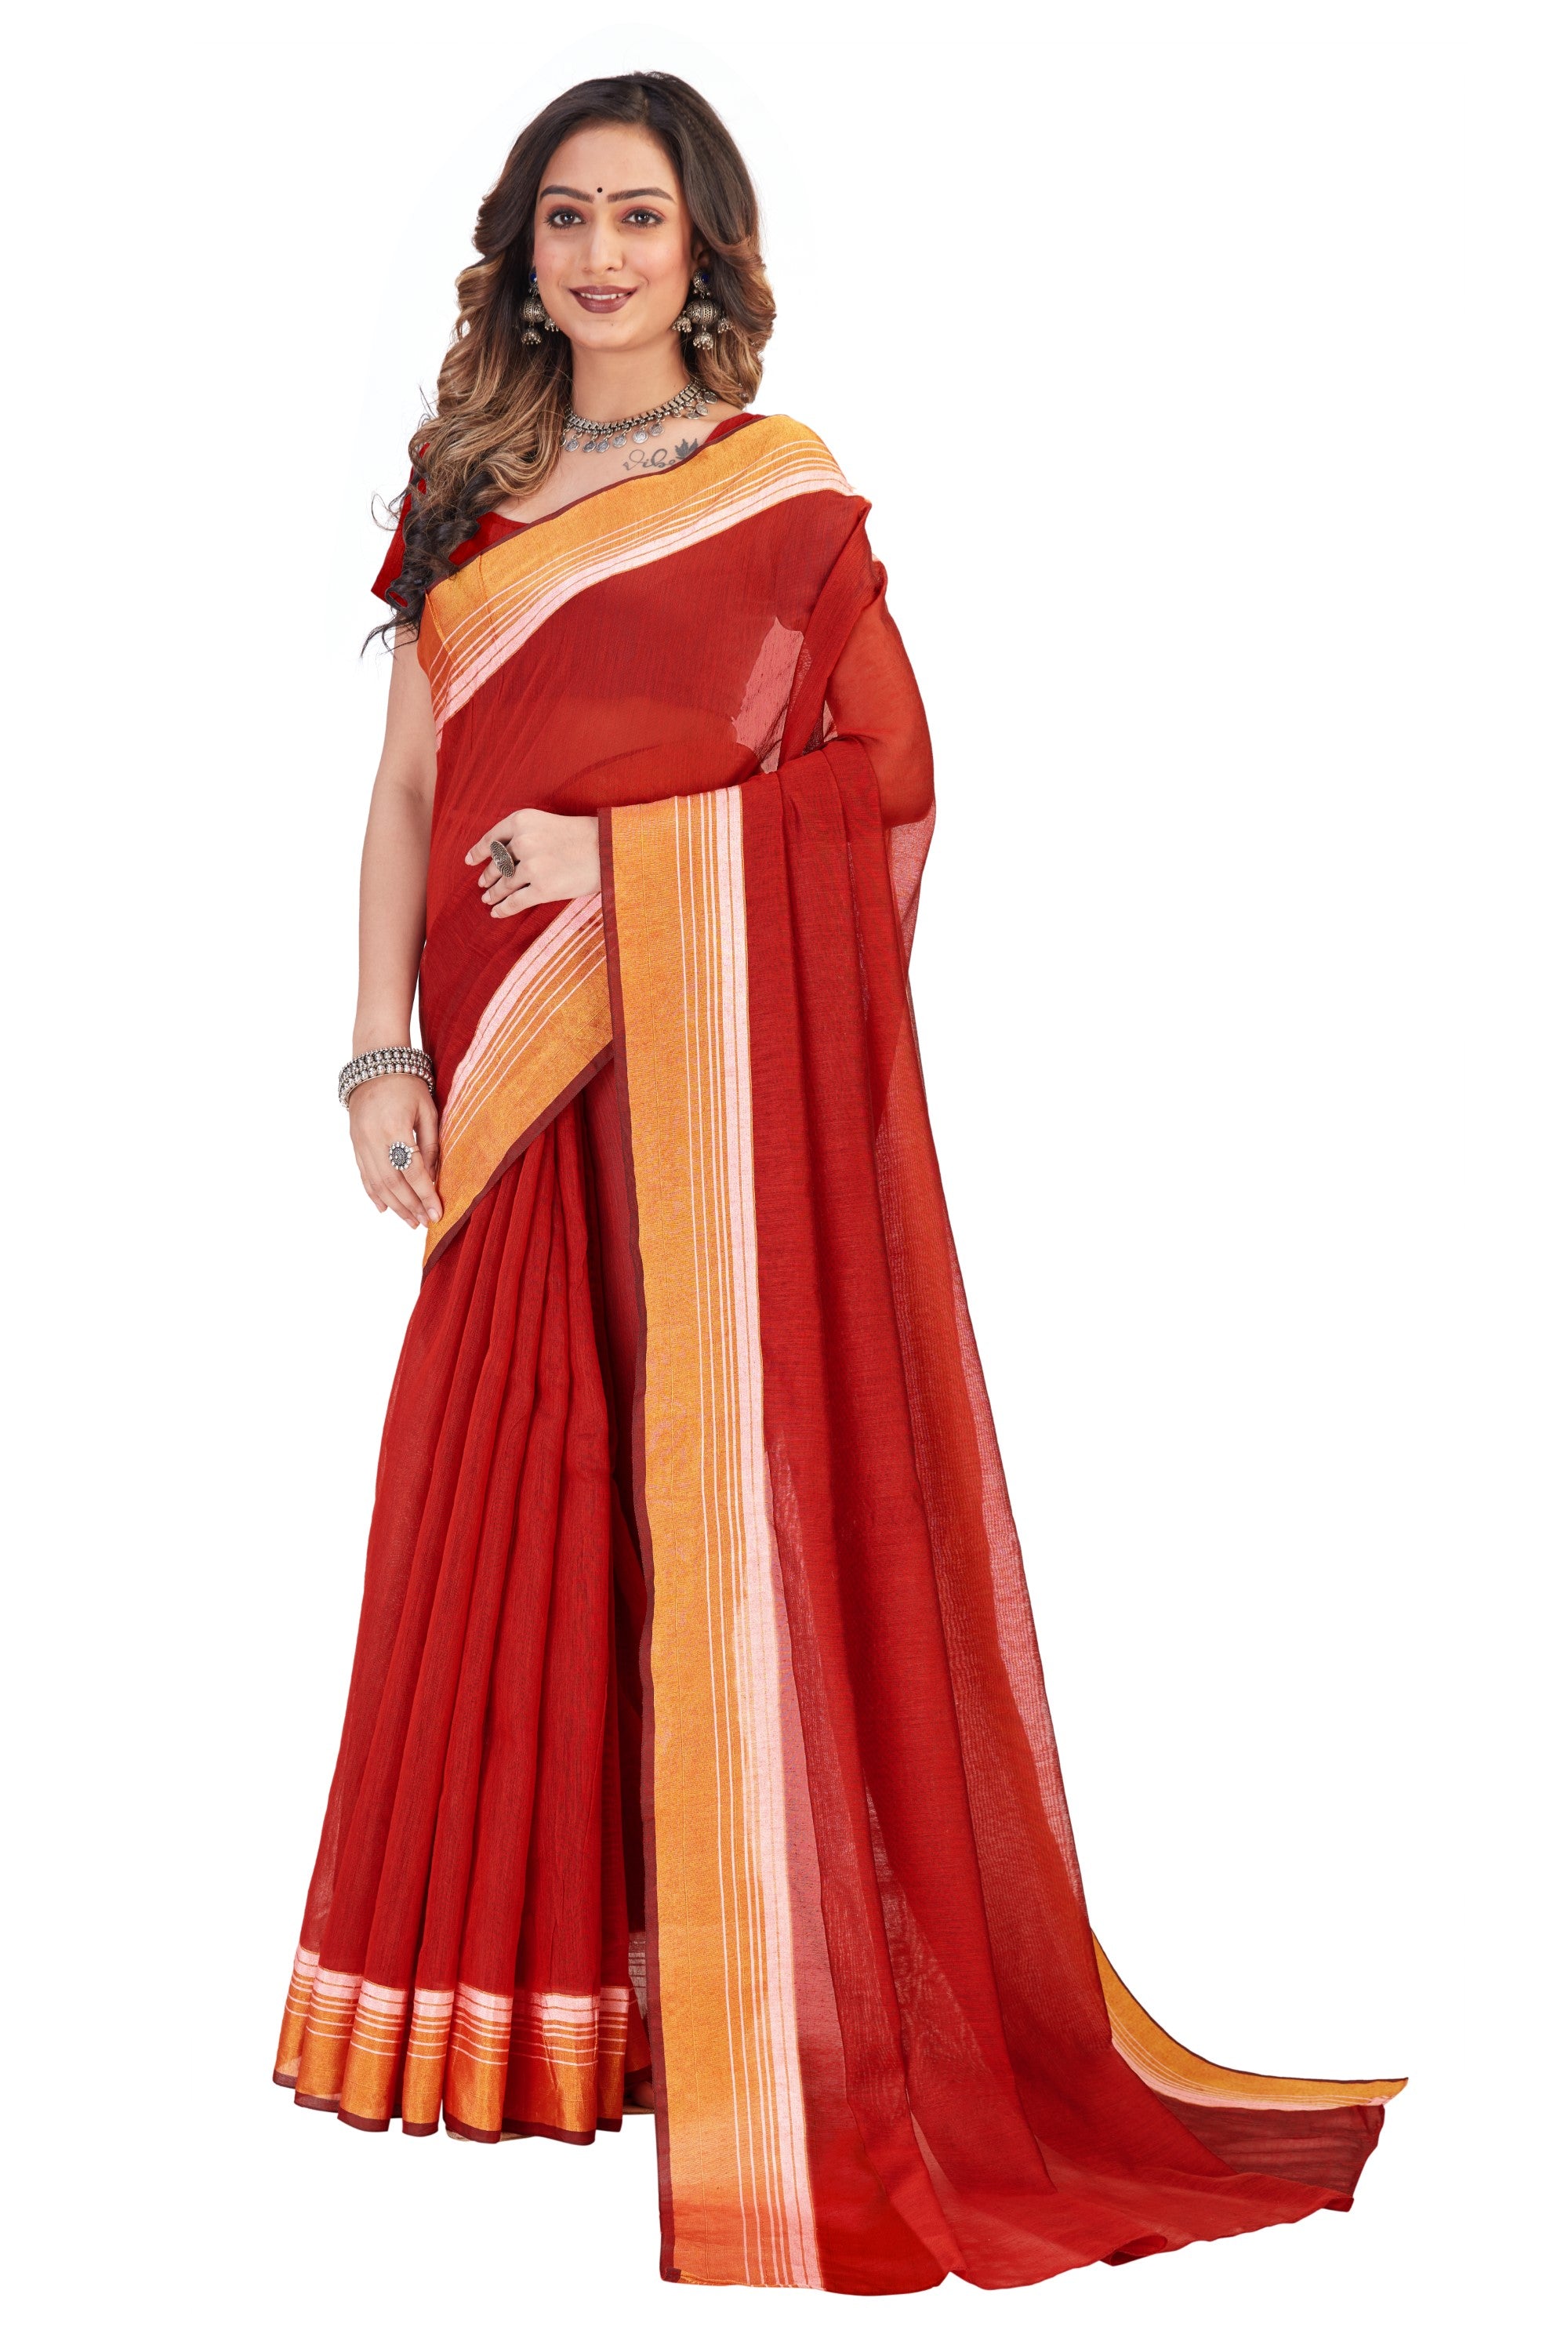 Women's self Woven Solid Daily Wear Cotton Blend Zari Border Sari With Blouse Piece (Orange) - NIMIDHYA